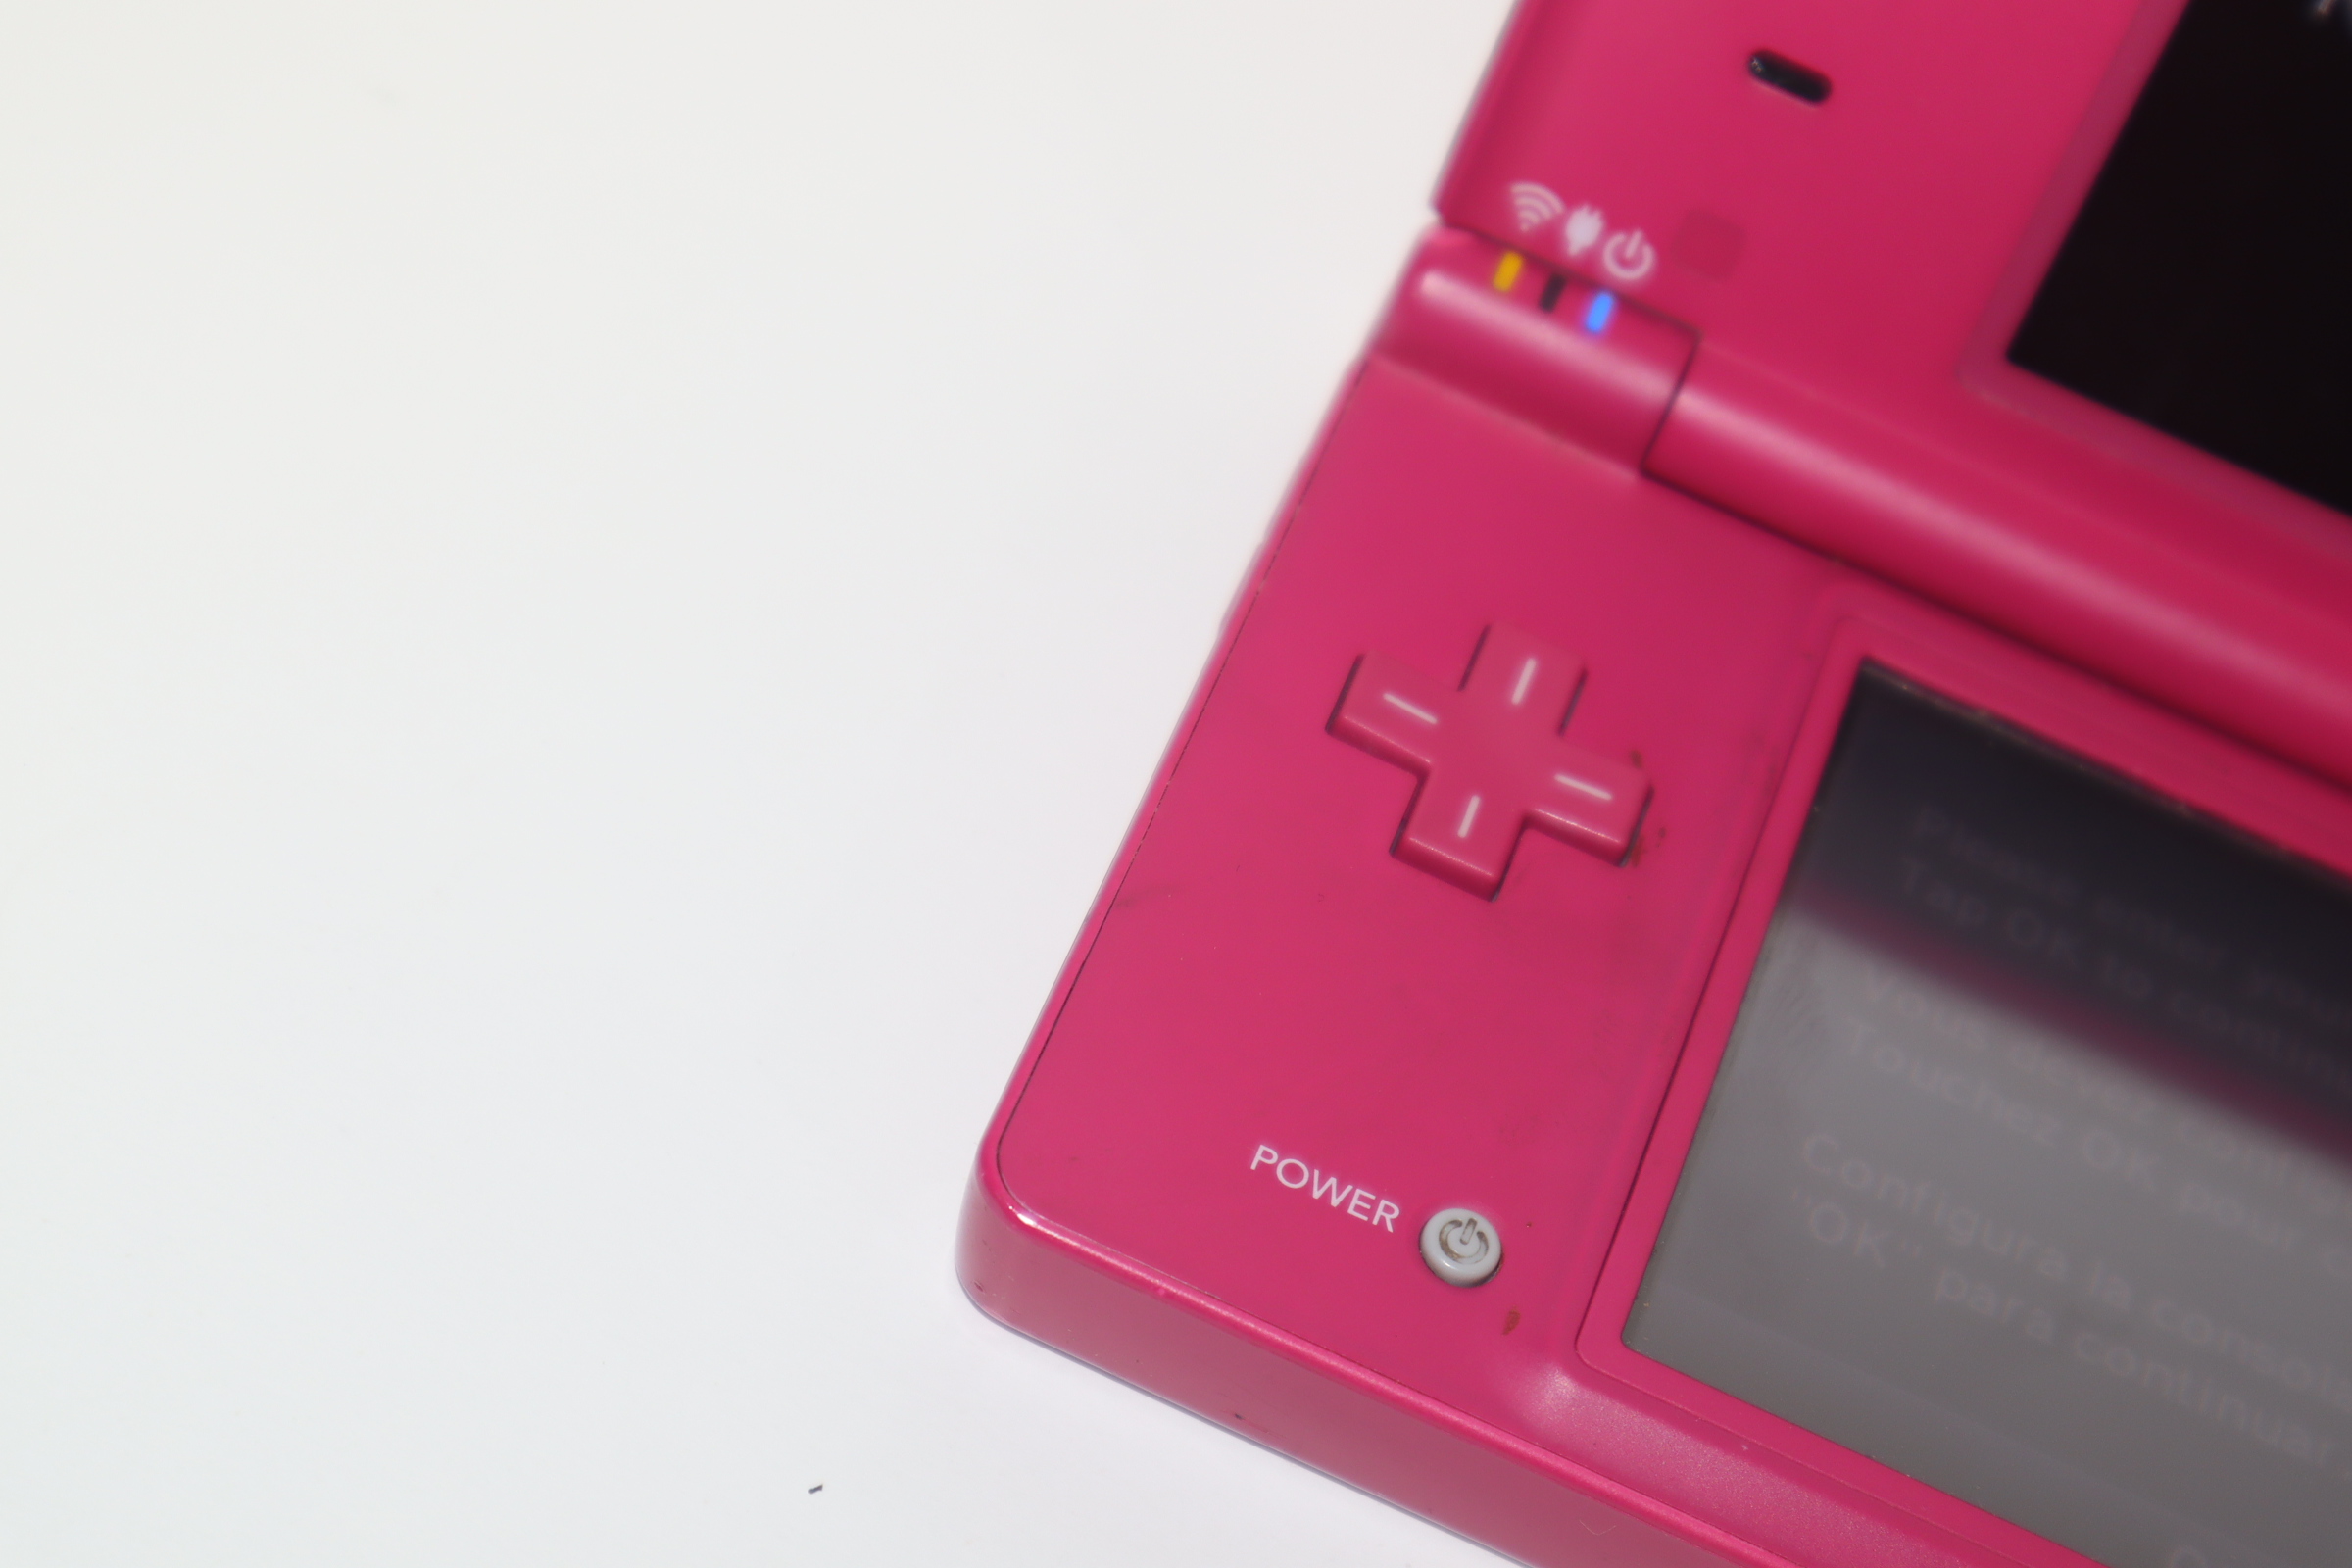 Nintendo DSi Portable Pink Console, Beautiful Body + Working Good